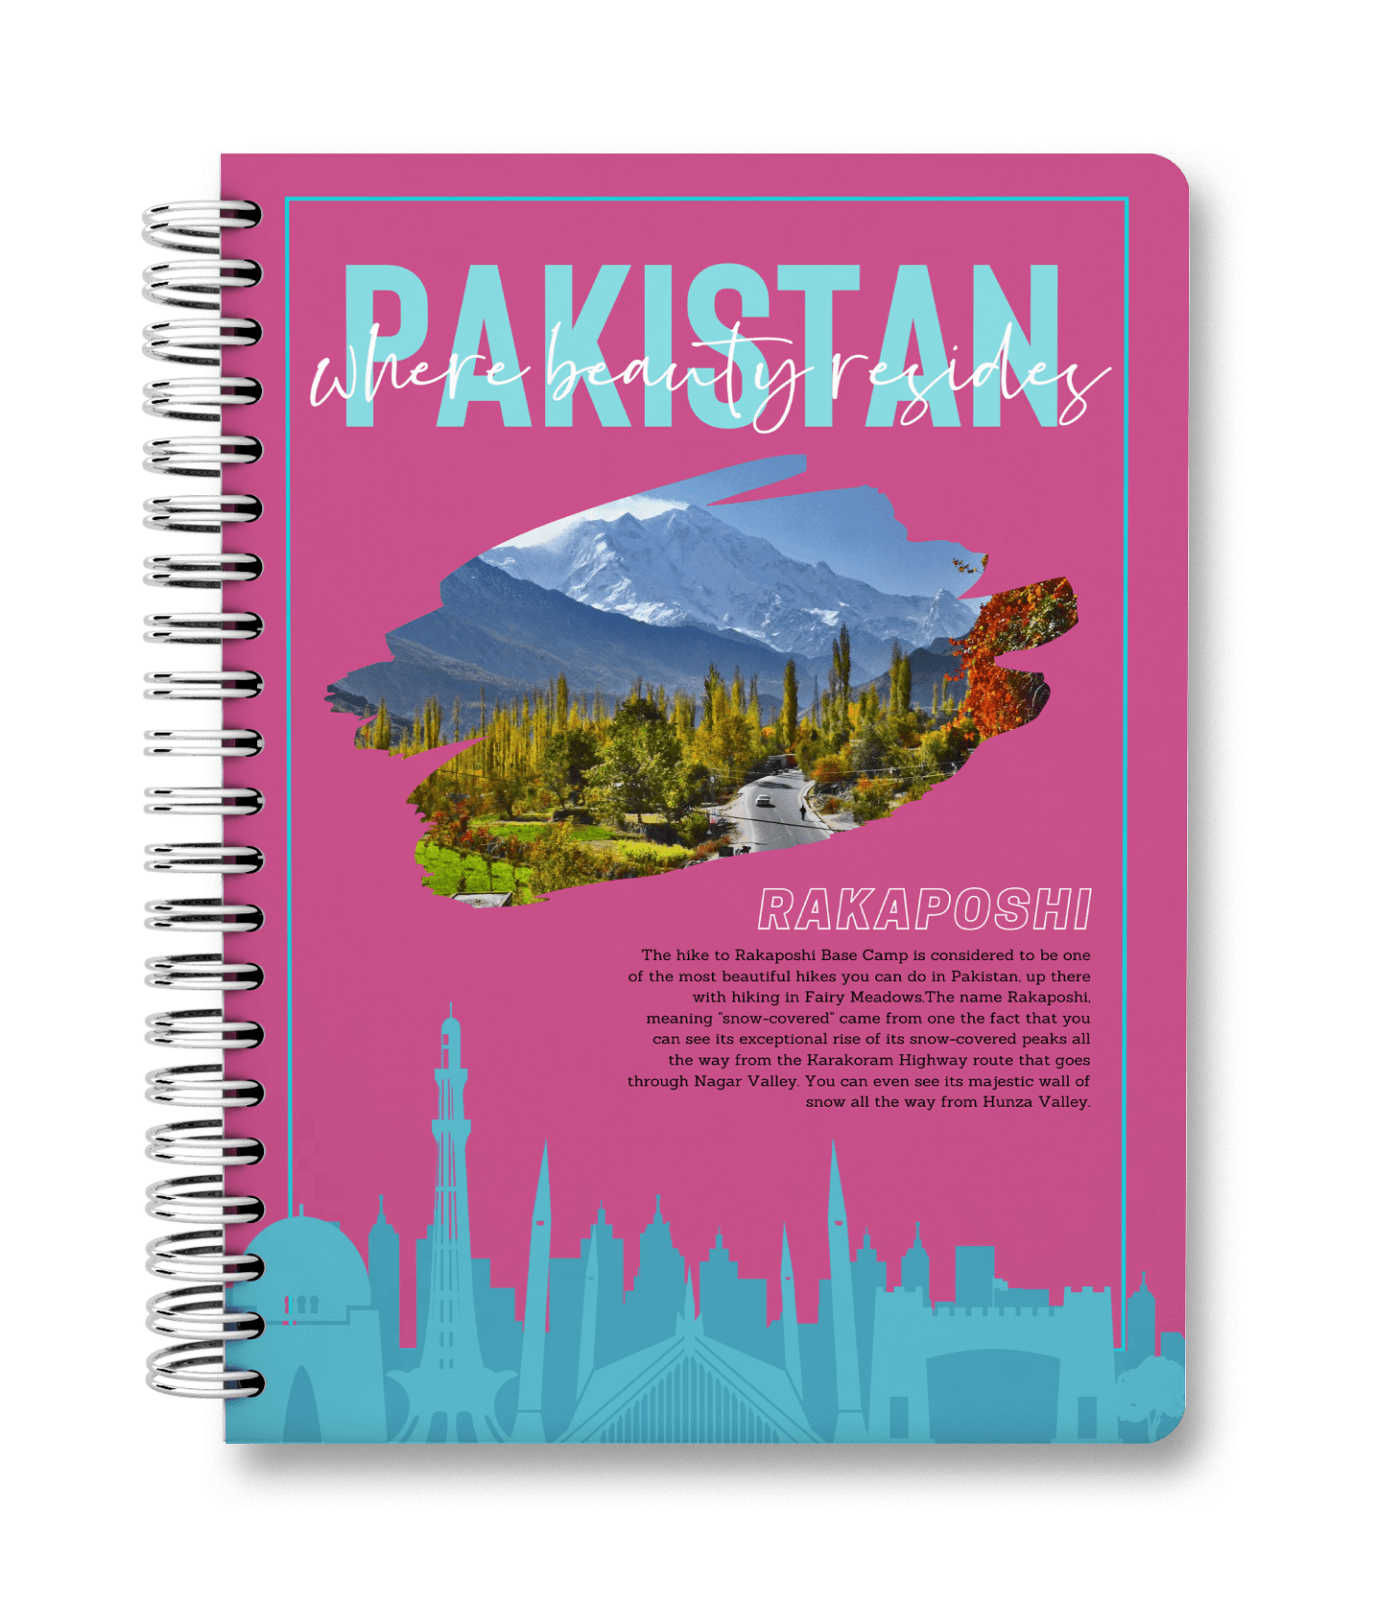 Pakistan Galore - Rakaposhi